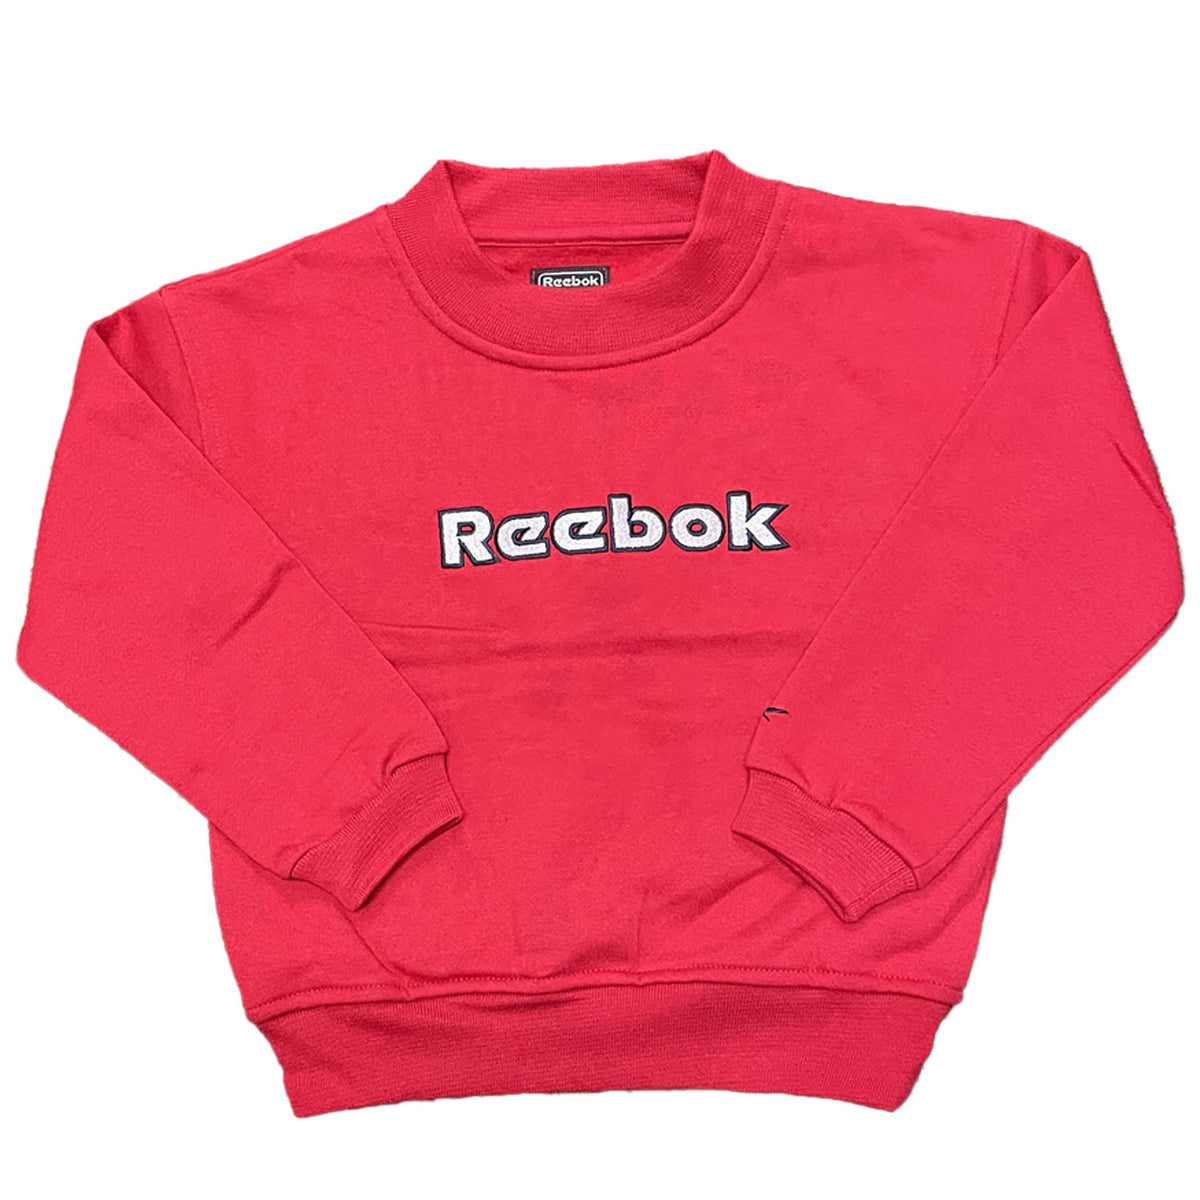 Reebok Infant Sports Range Sweatshirt 4